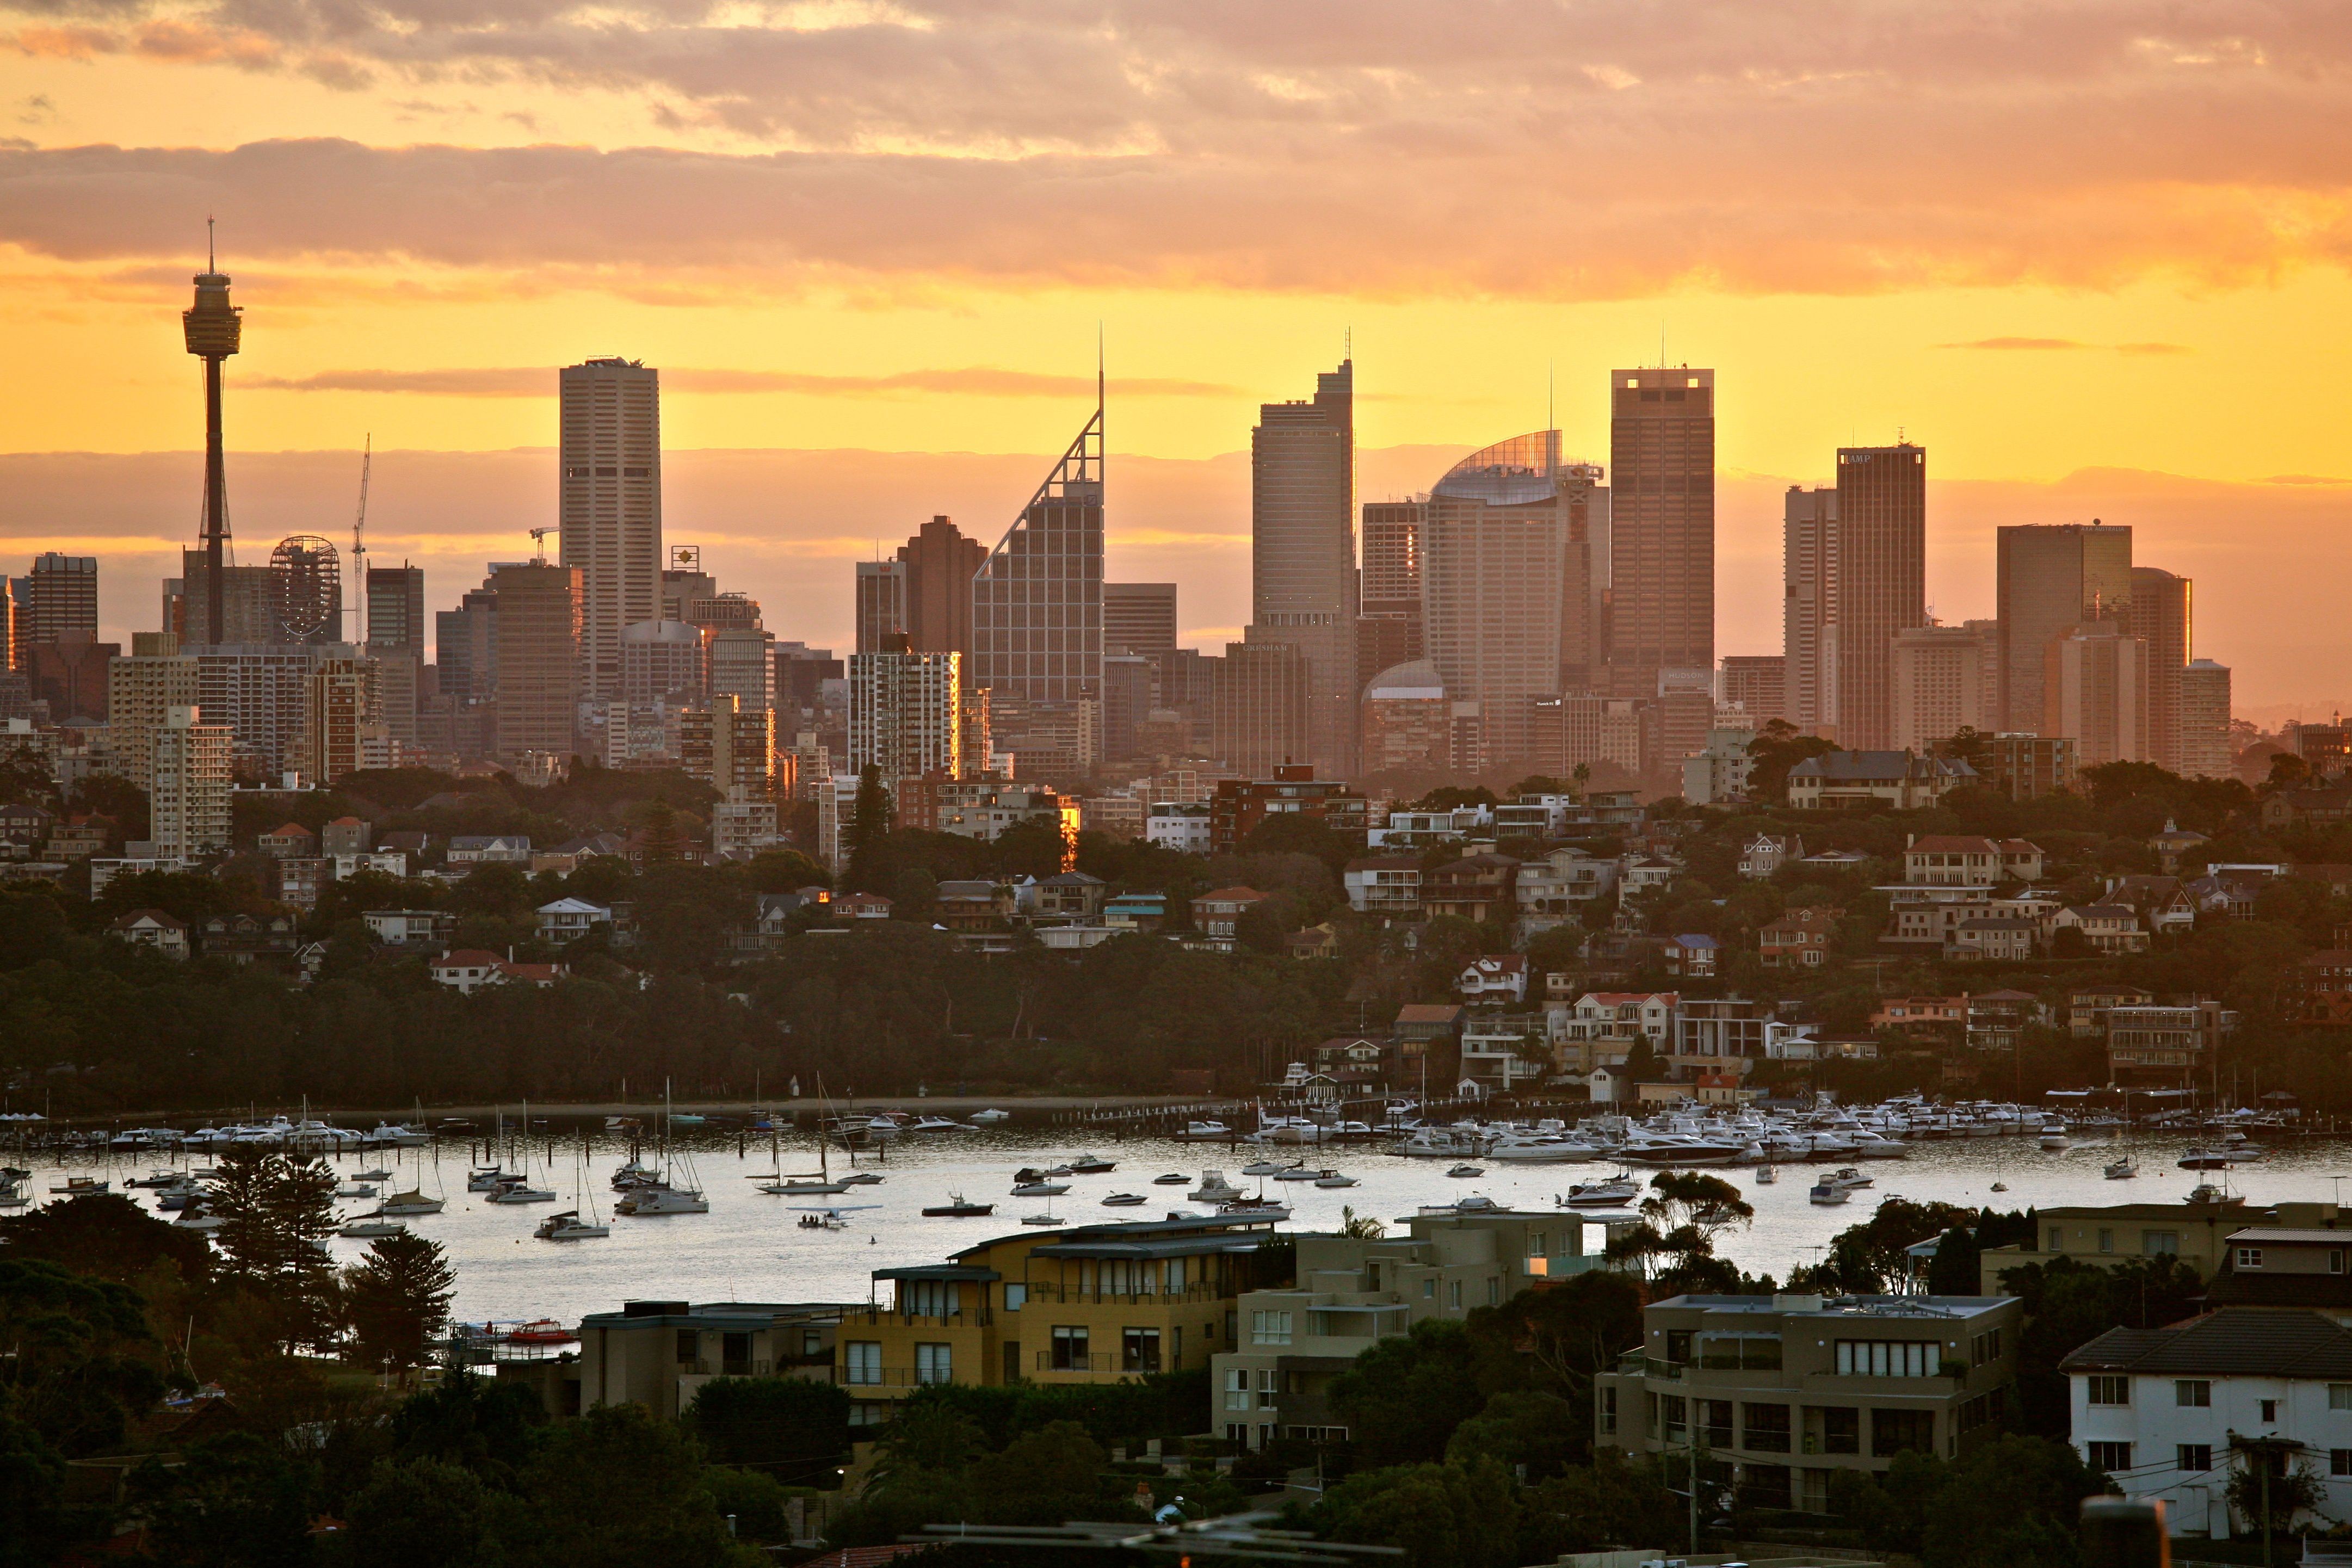 Sydney skyline at sunset wallpaper. PC